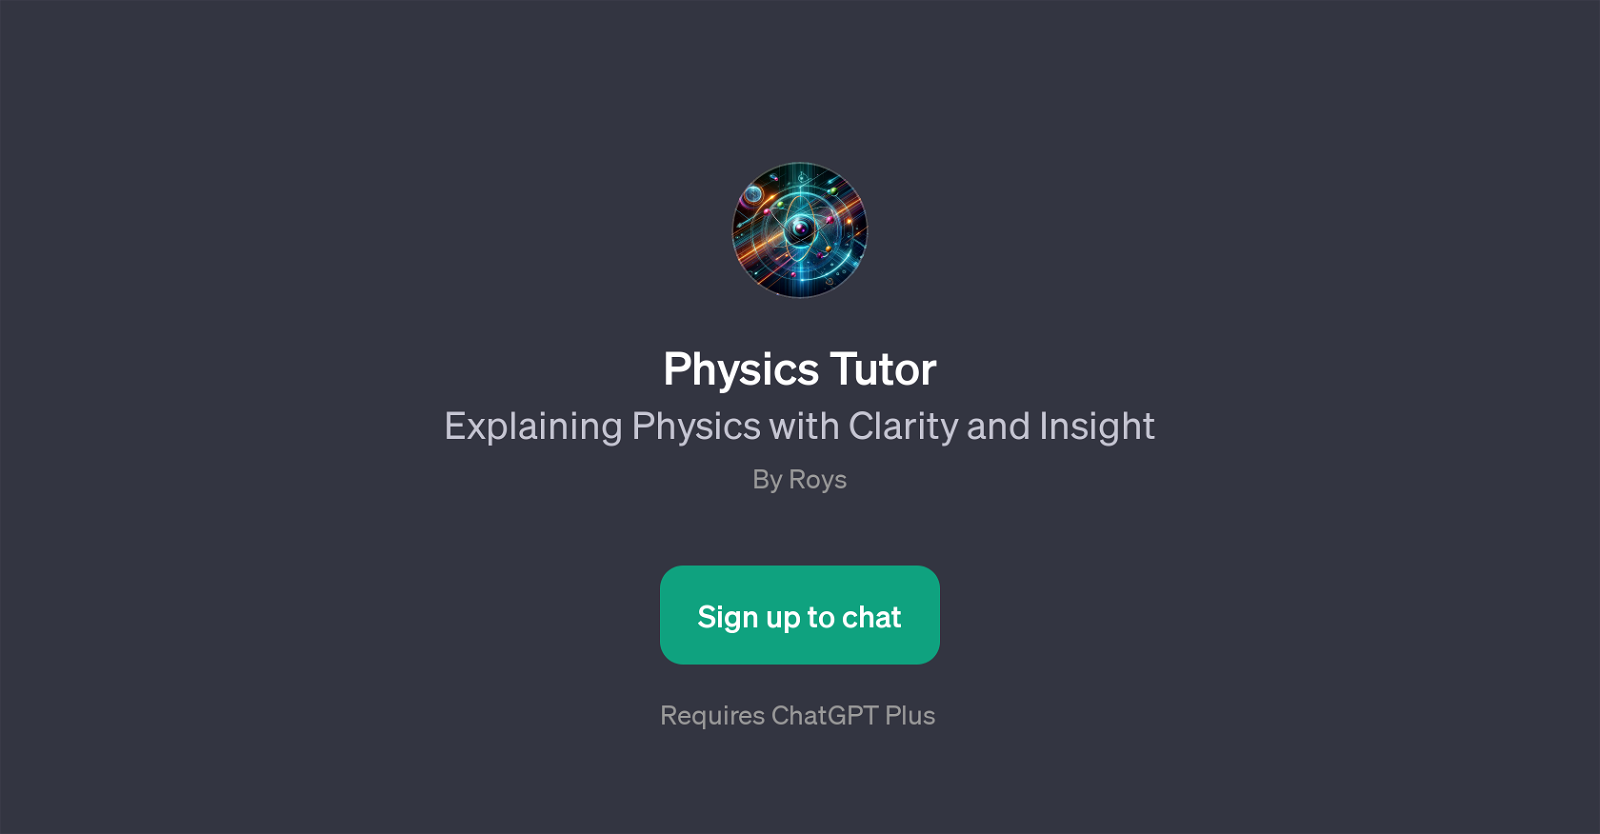 Physics Tutor website